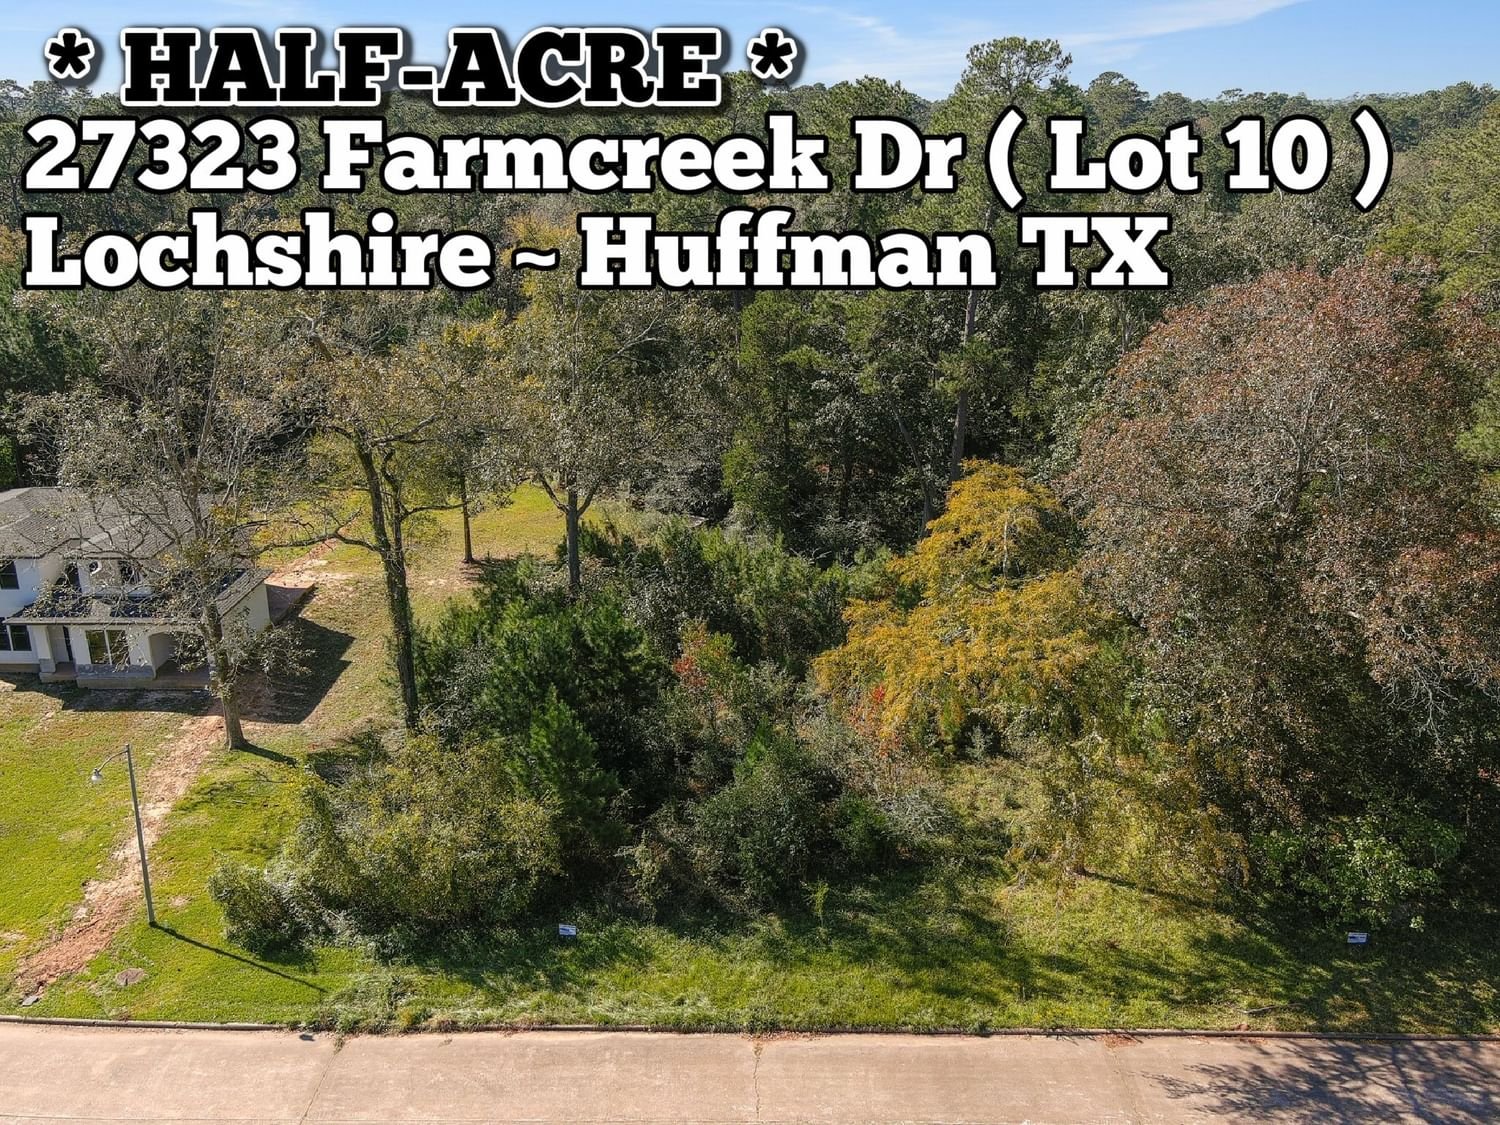 Real estate property located at 27323 Farmcreek, Harris, Lochshire, Huffman, TX, US